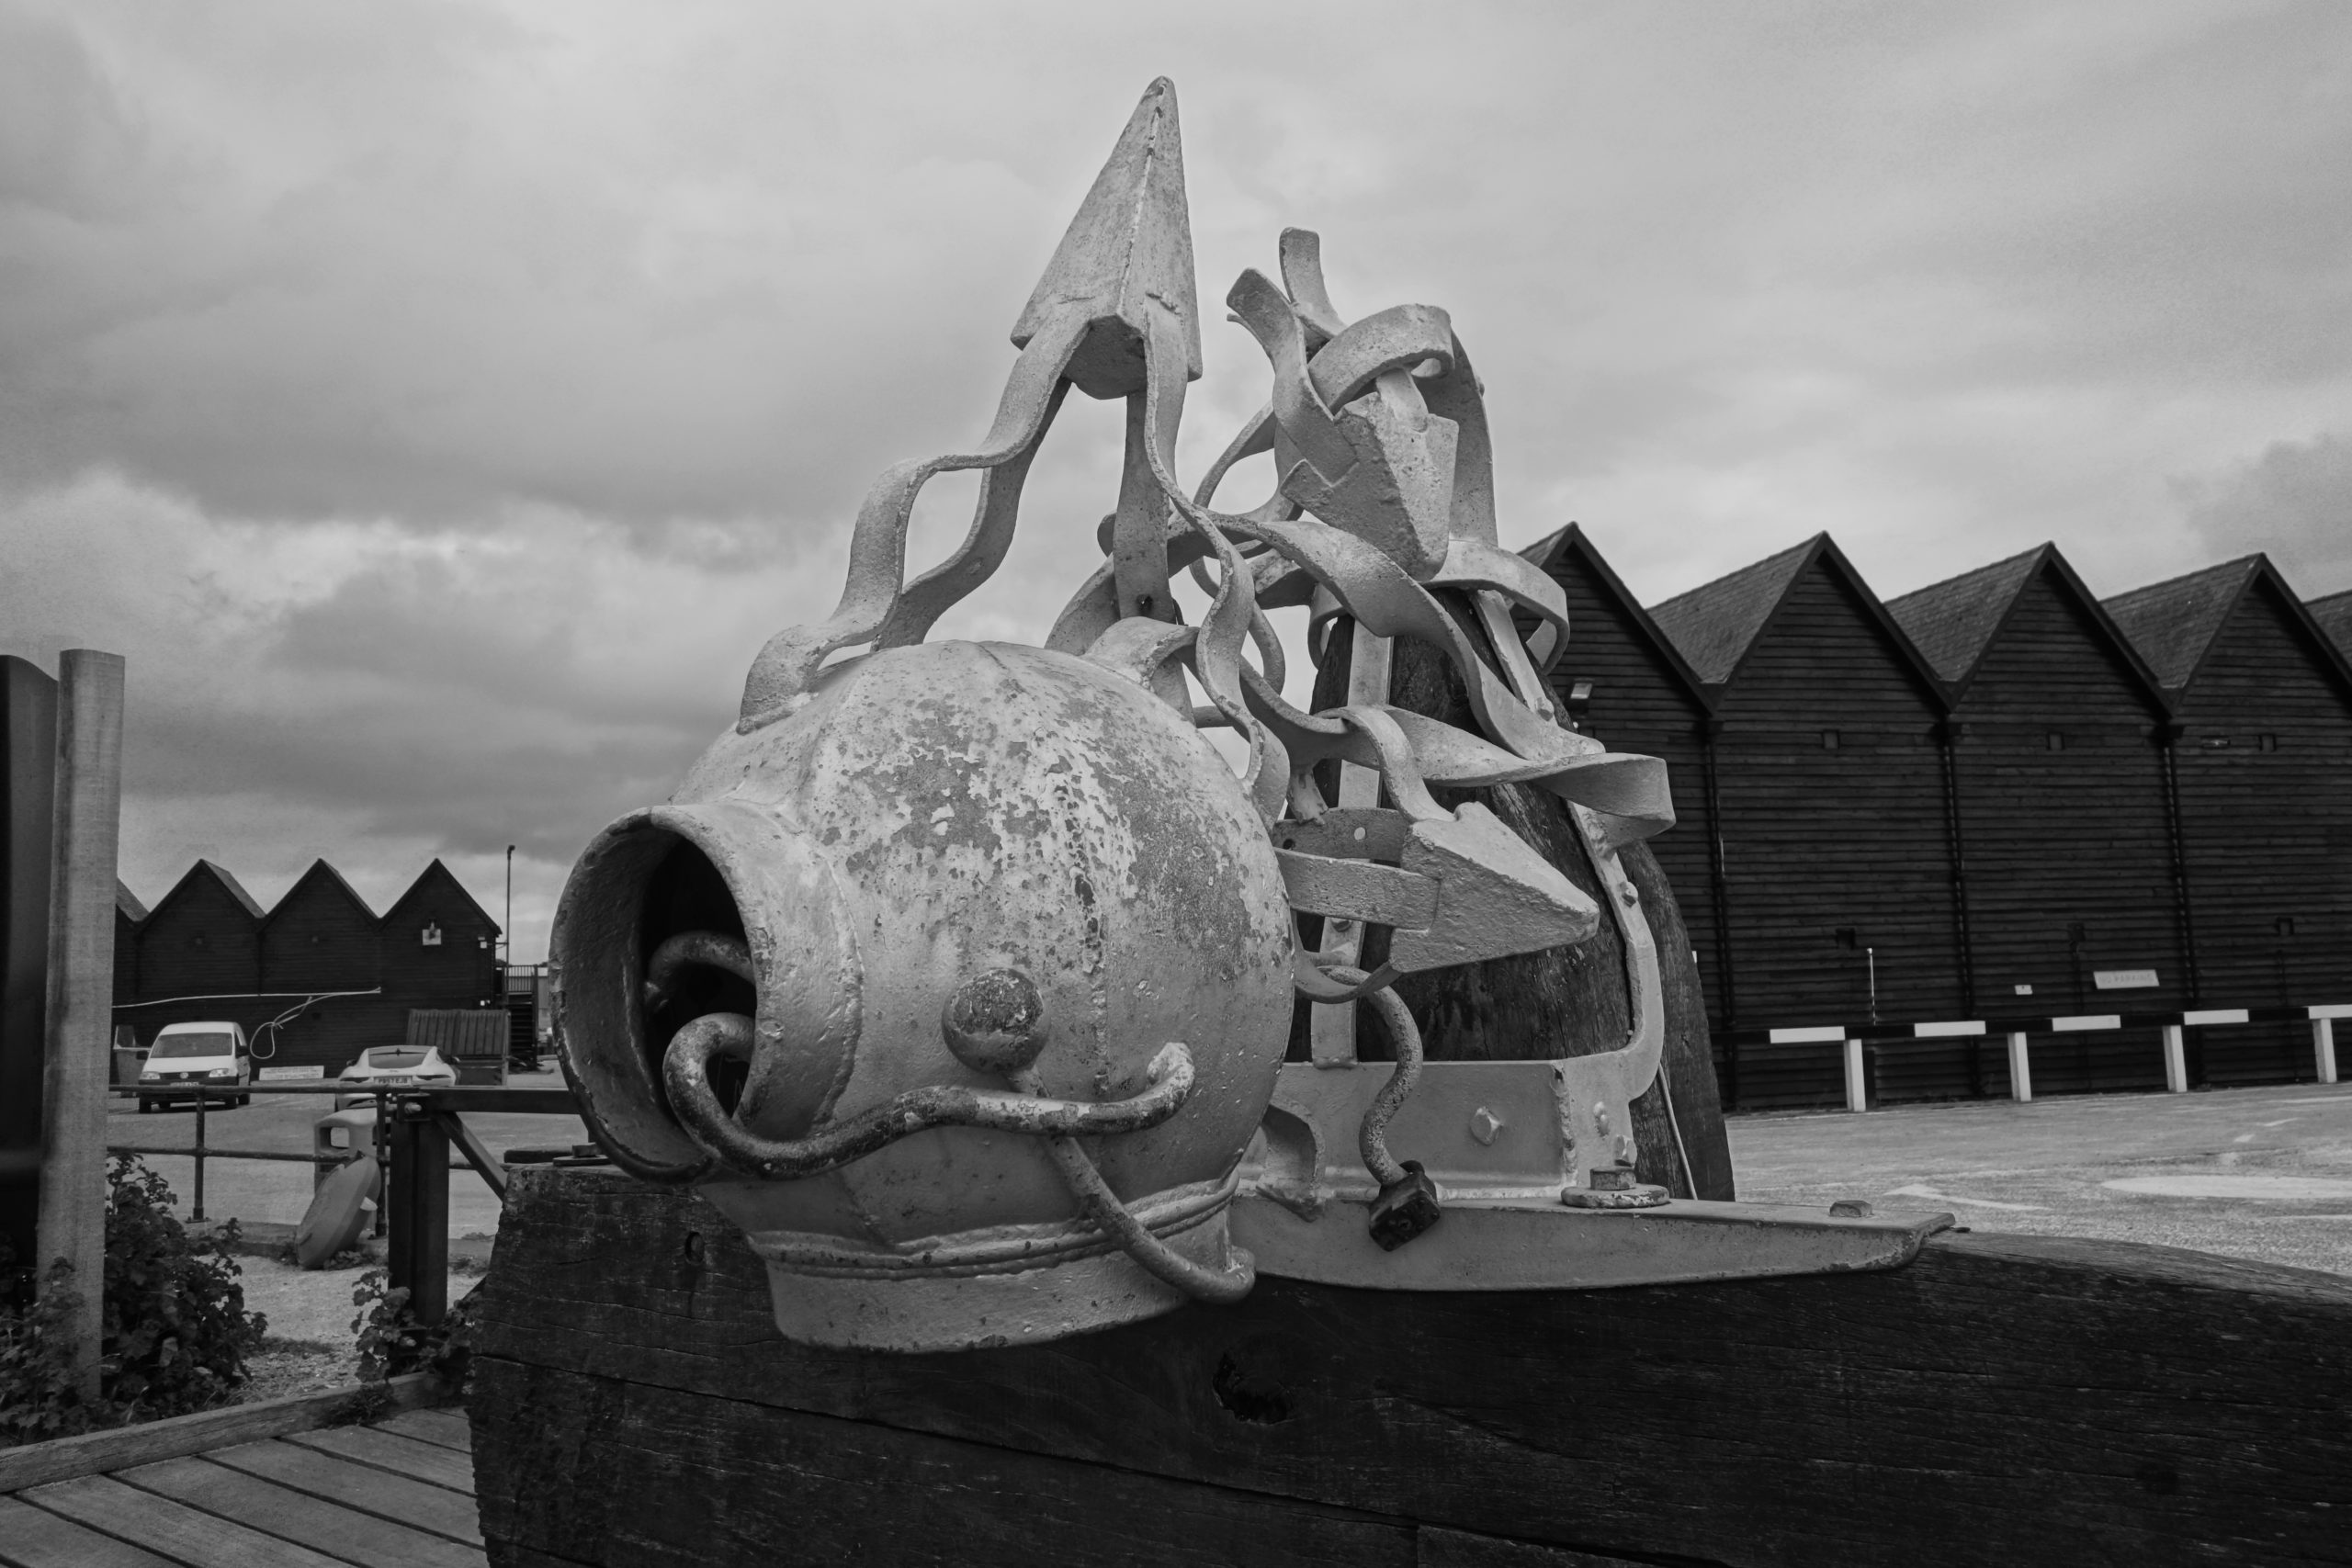 A diving sculpture in Kent England